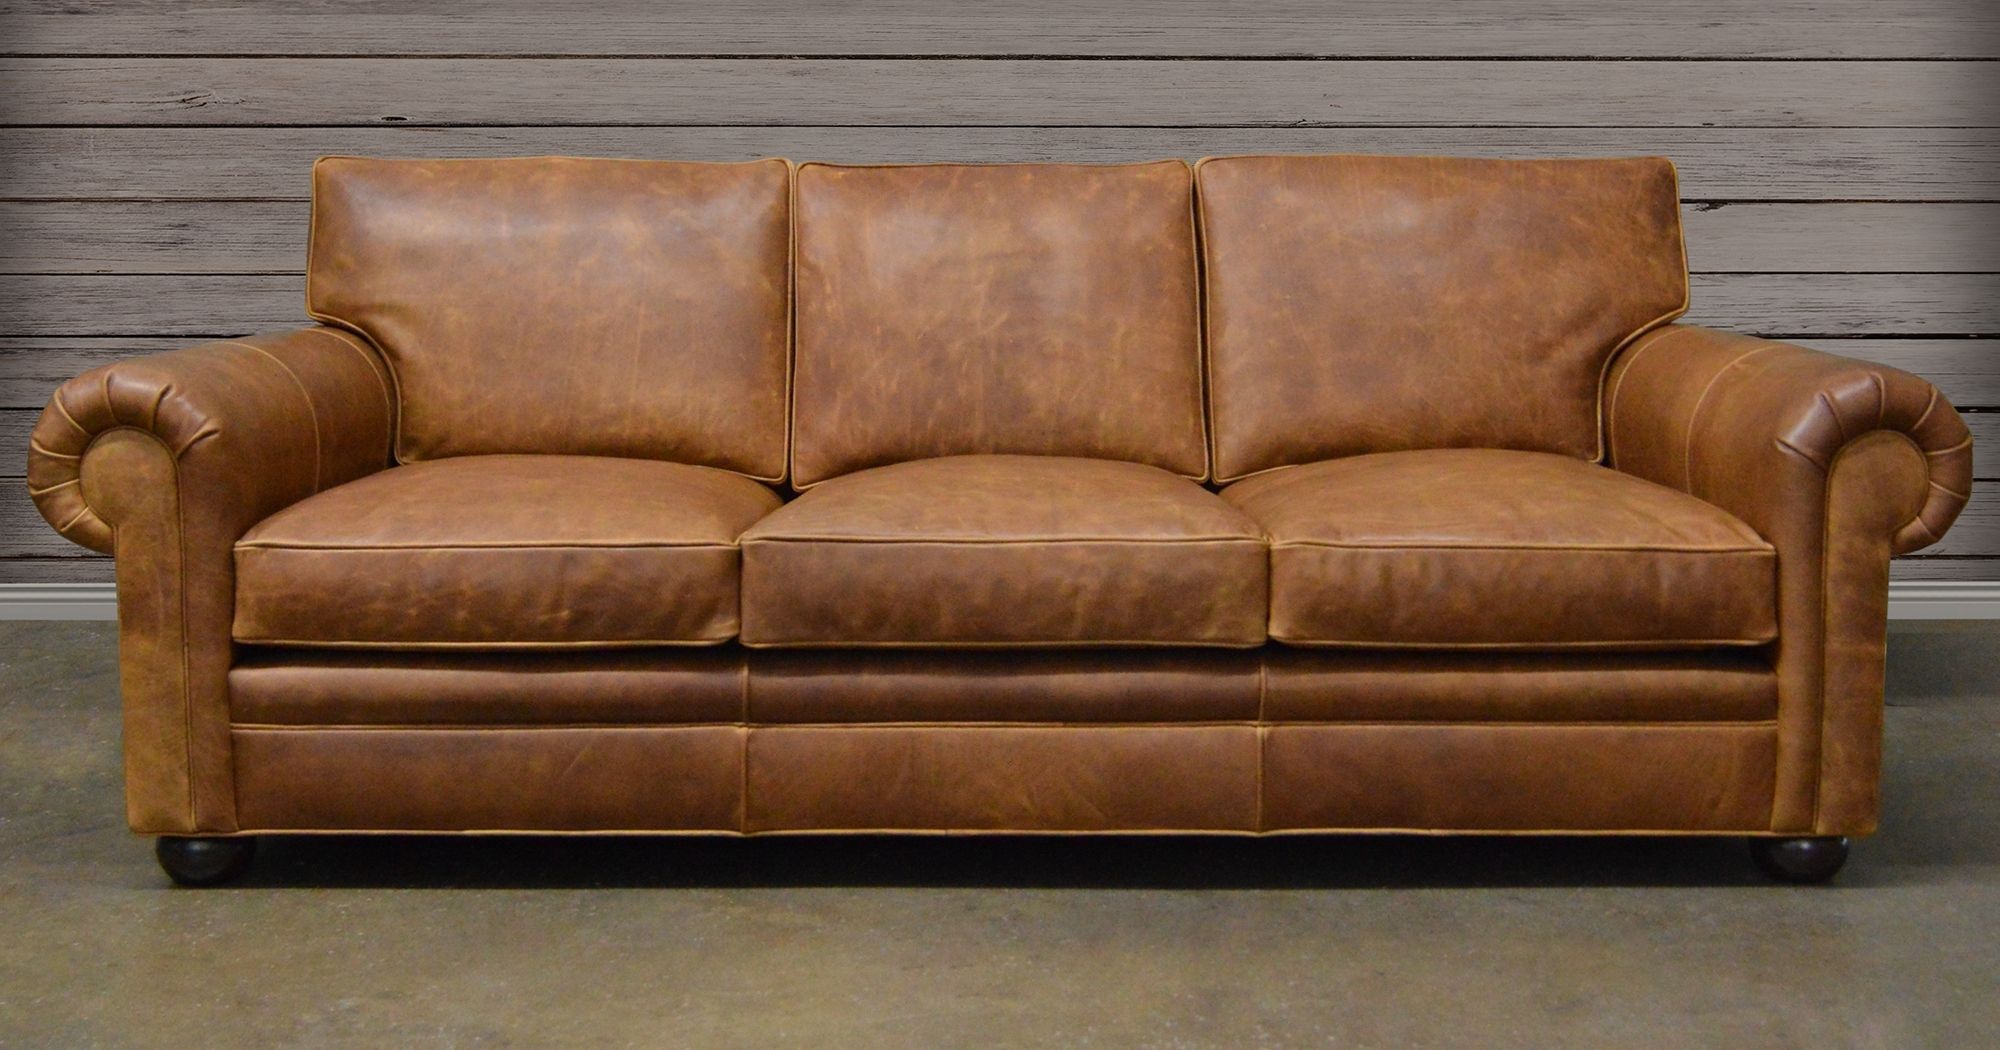 overstock bastian aniline leather sofa revoew